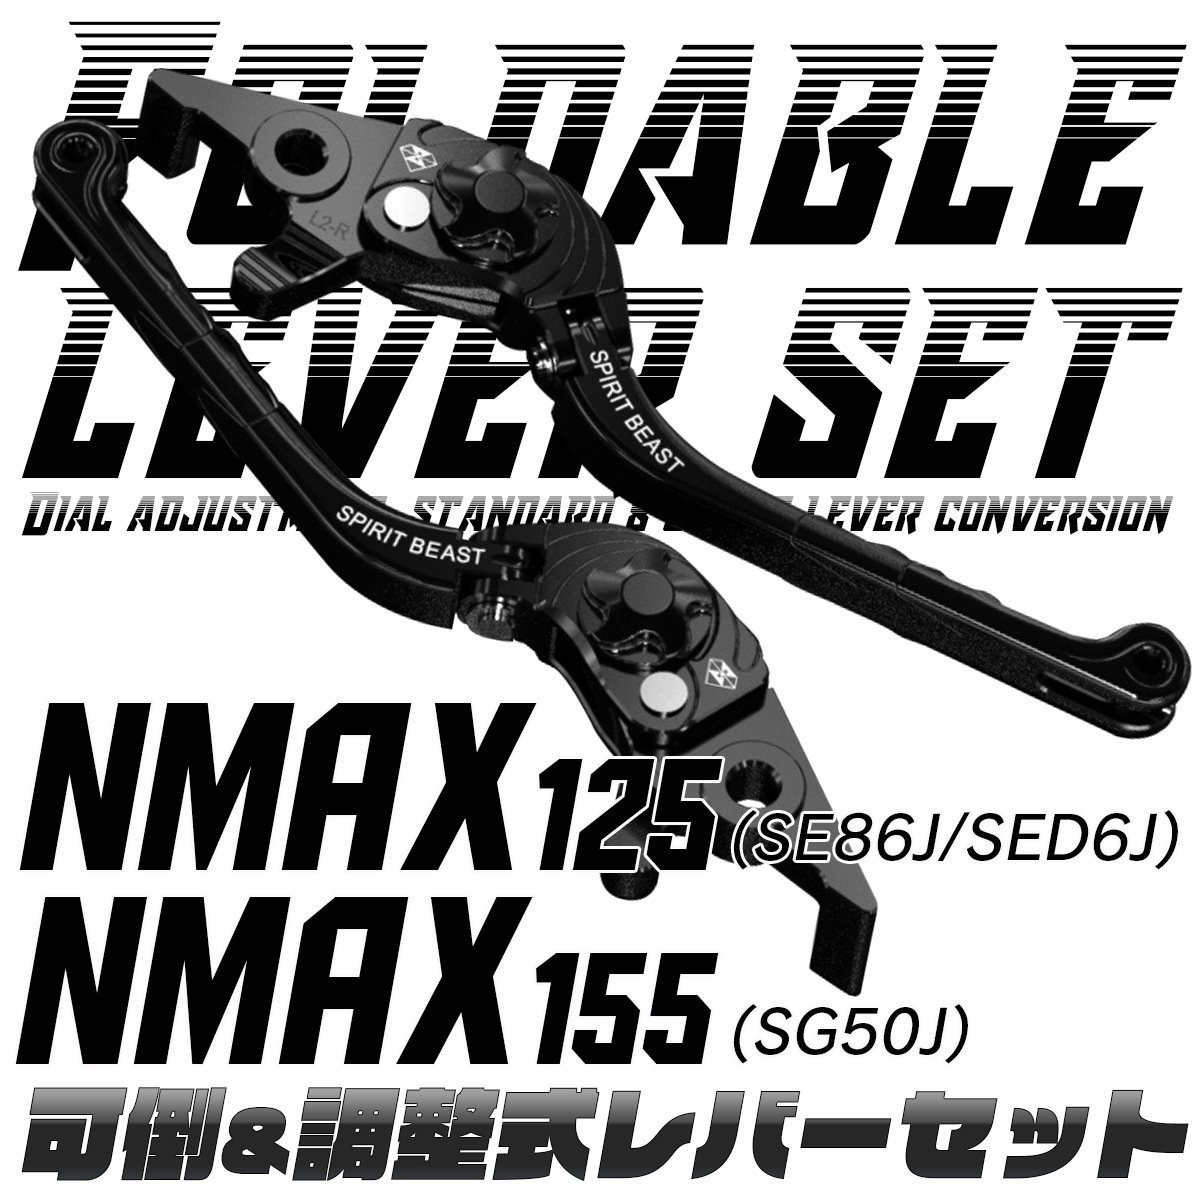 NMAX125 ブレーキレバーセット 可倒式 ダイヤル式アジャスター 調整ヤマハ車用 SE86J SED6J NMAX155 SG50J ブラック S-969BK_画像1